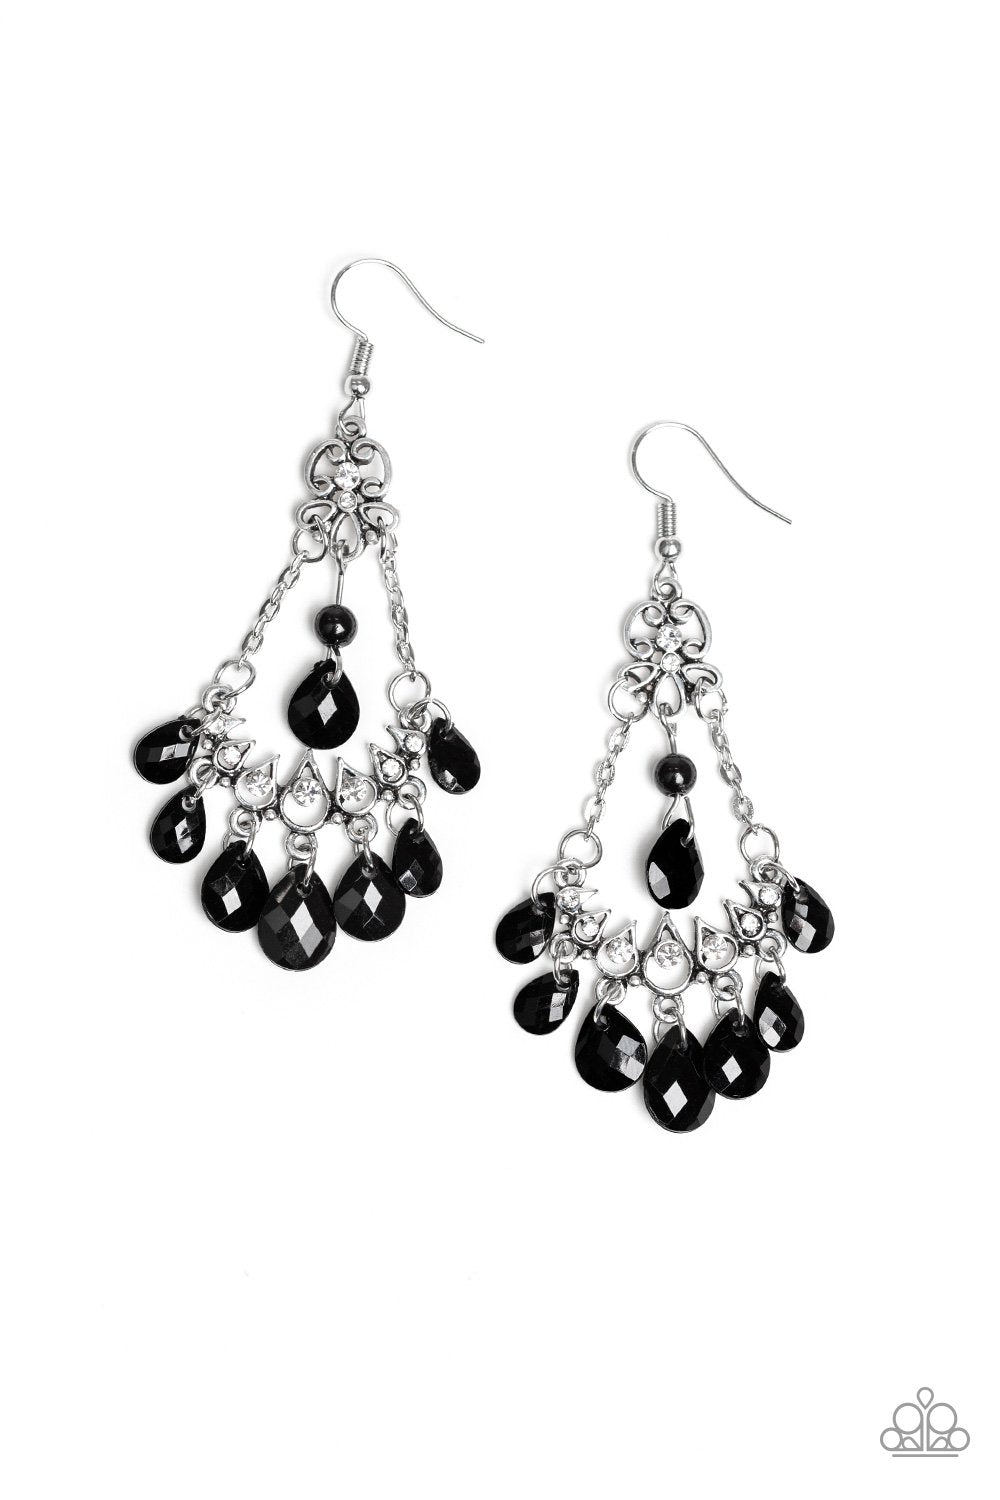 Malibu Sunset Black Earrings - Paparazzi Accessories - lightbox -CarasShop.com - $5 Jewelry by Cara Jewels